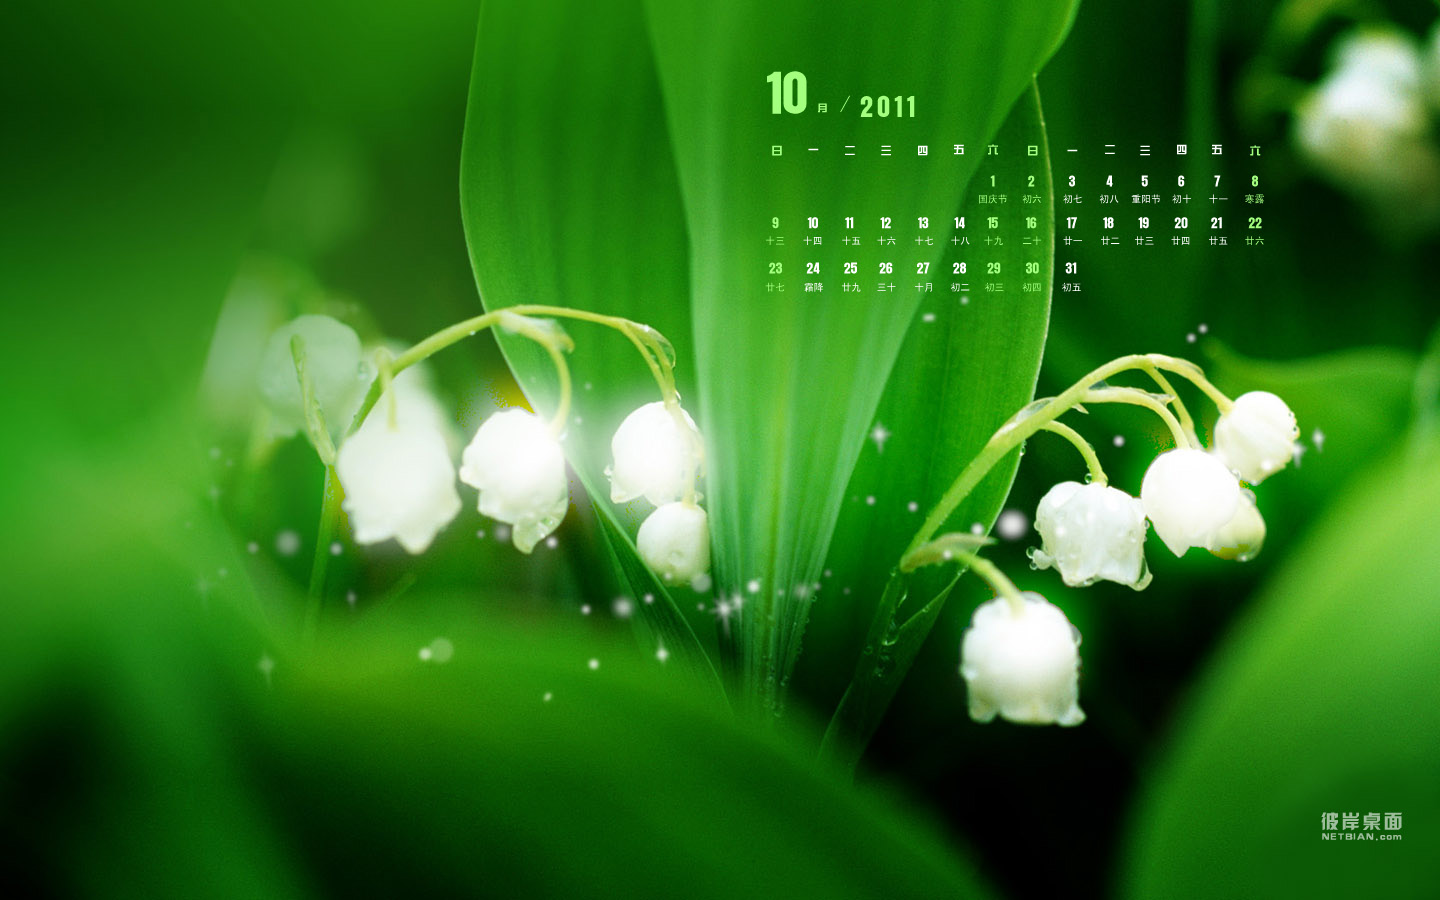 Green lily of the valley October 2011 calendar wallpaper desktop